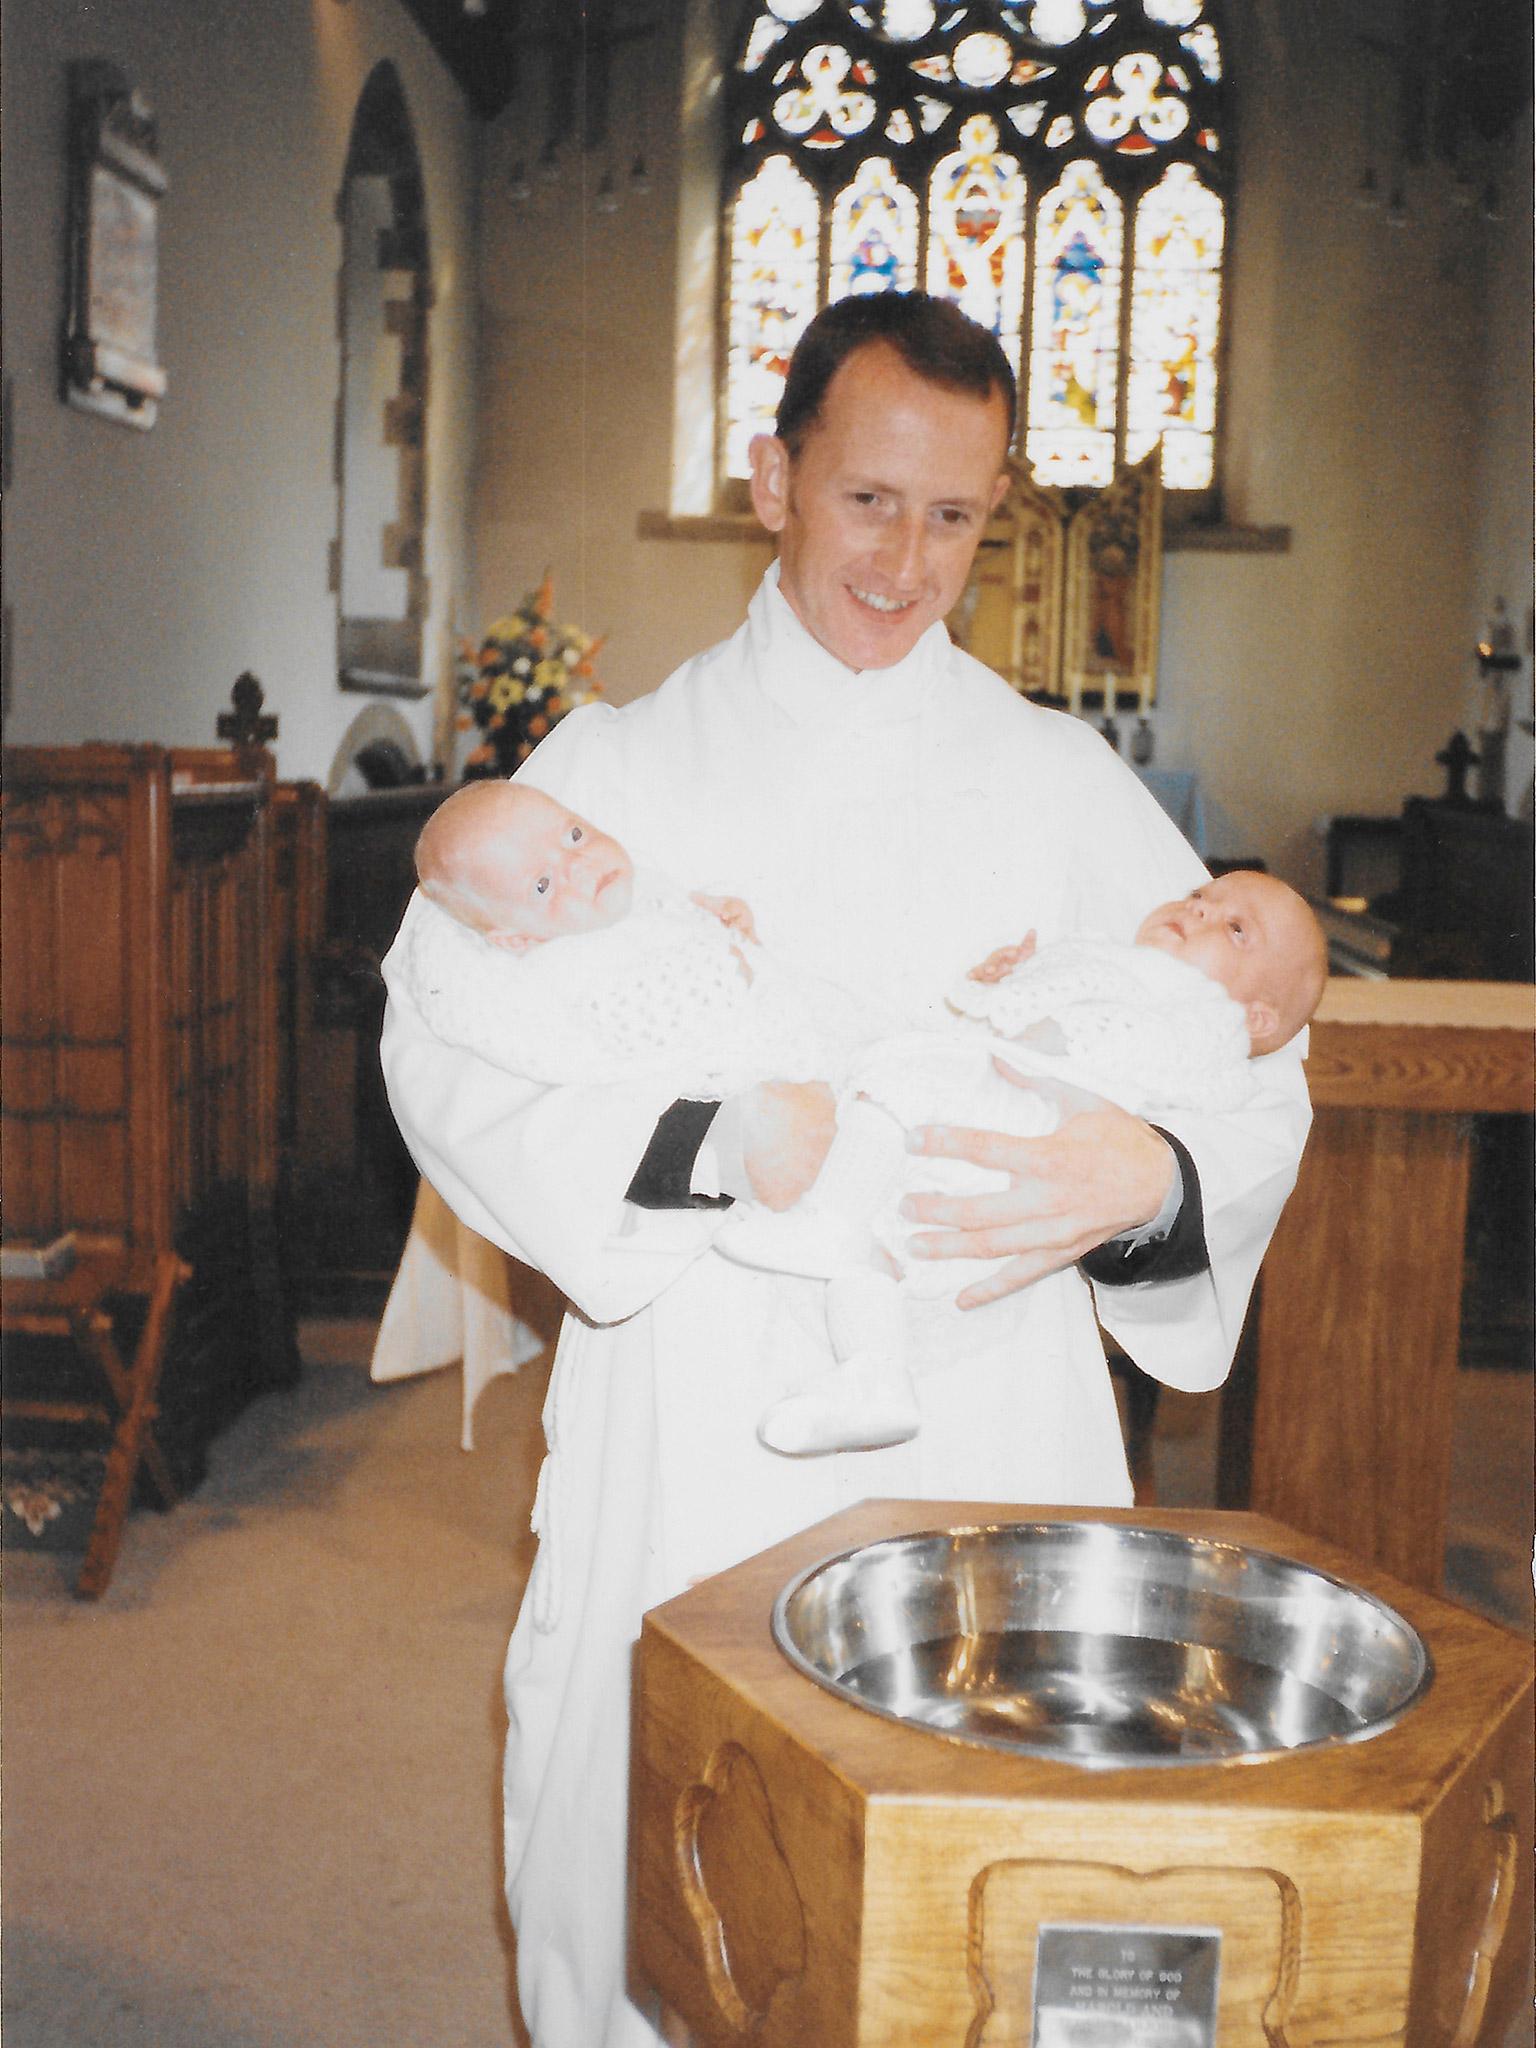 Simon baptising two babies at Dinnington Church in 1985